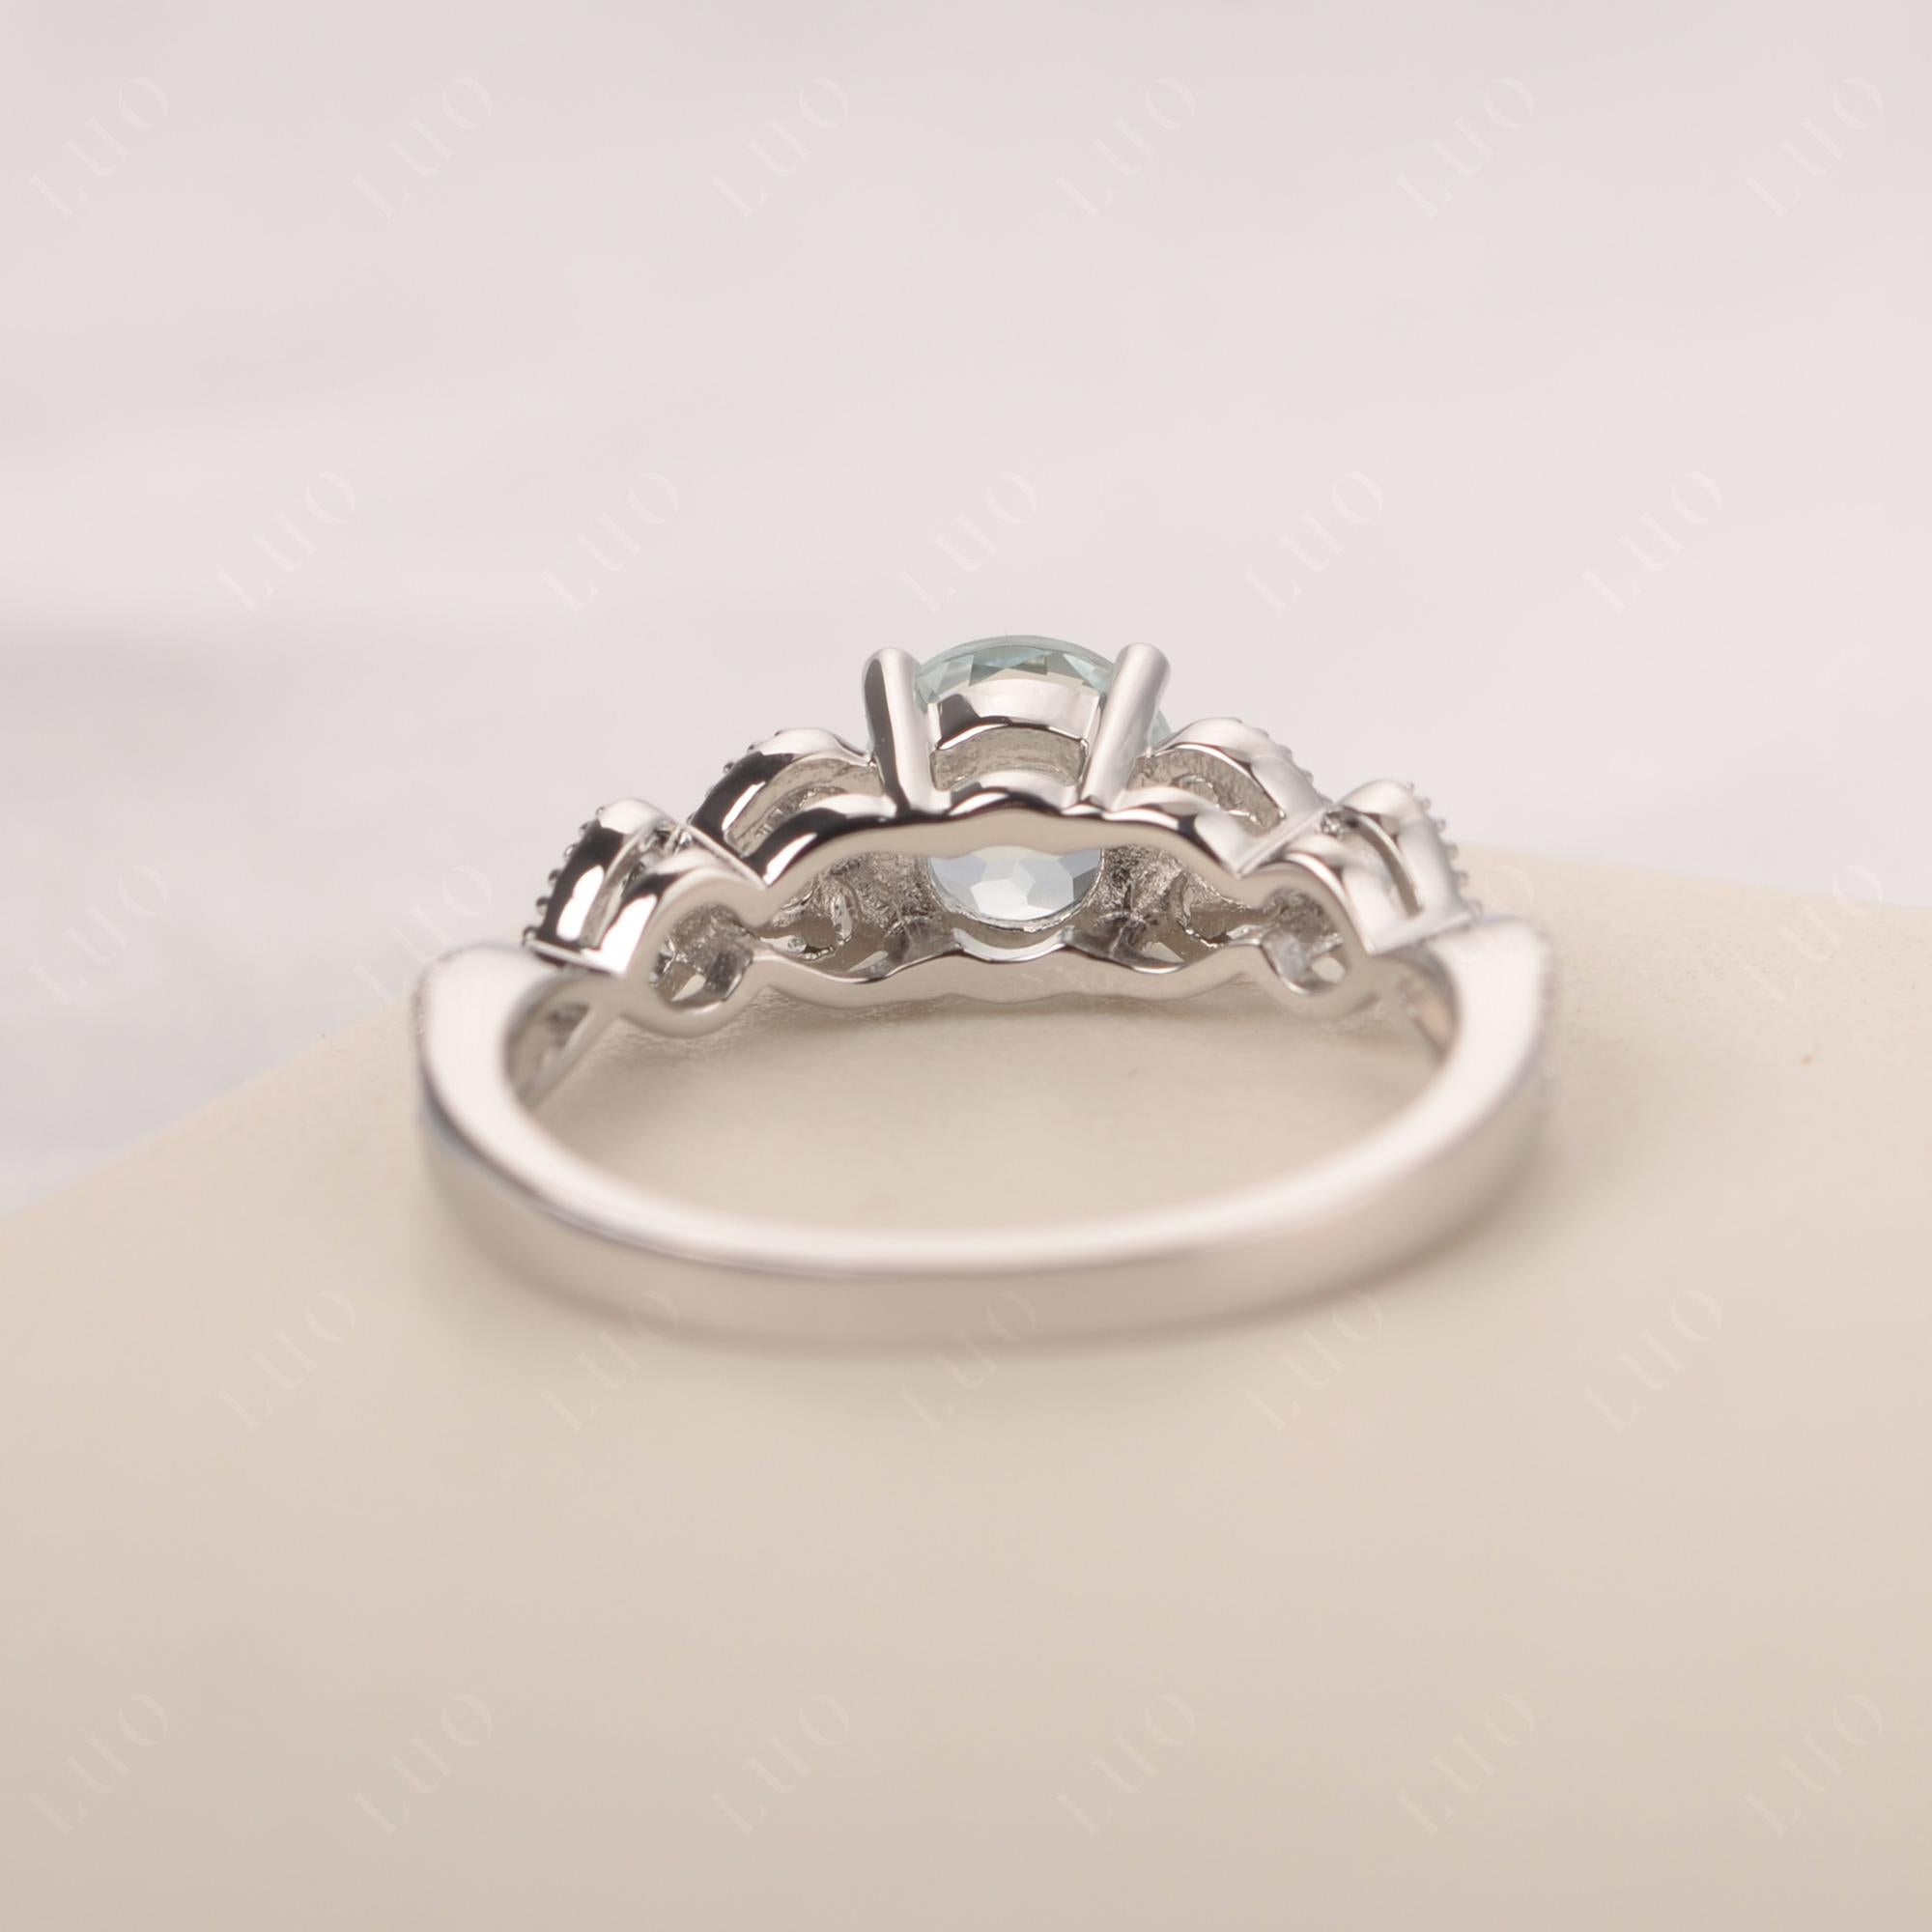 Aquamarine Vintage Style Engagement Ring - LUO Jewelry